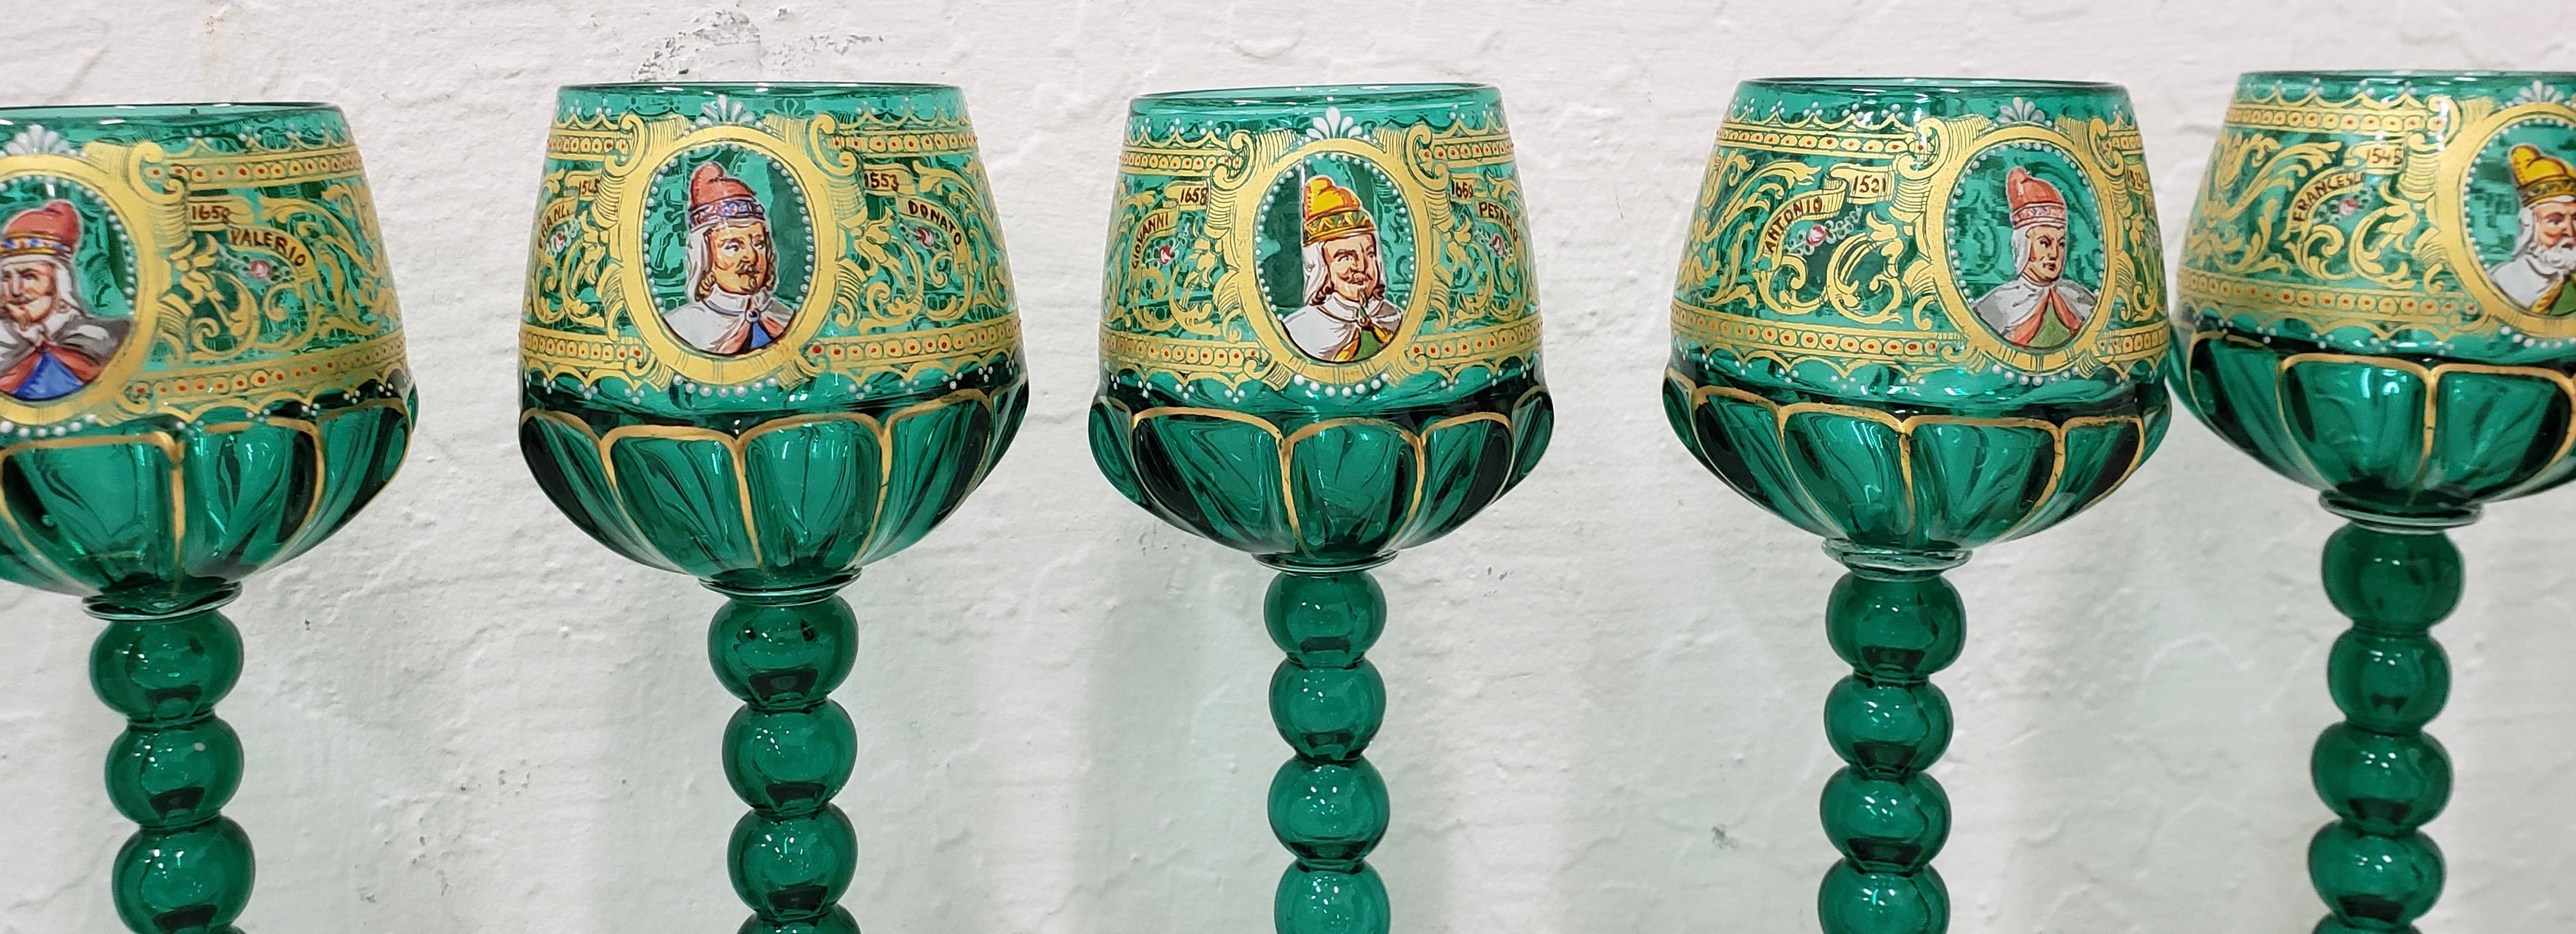 Italian Set of 9 Salviati Murano Wine Glasses Hand Painted with Notable Venetian Figures